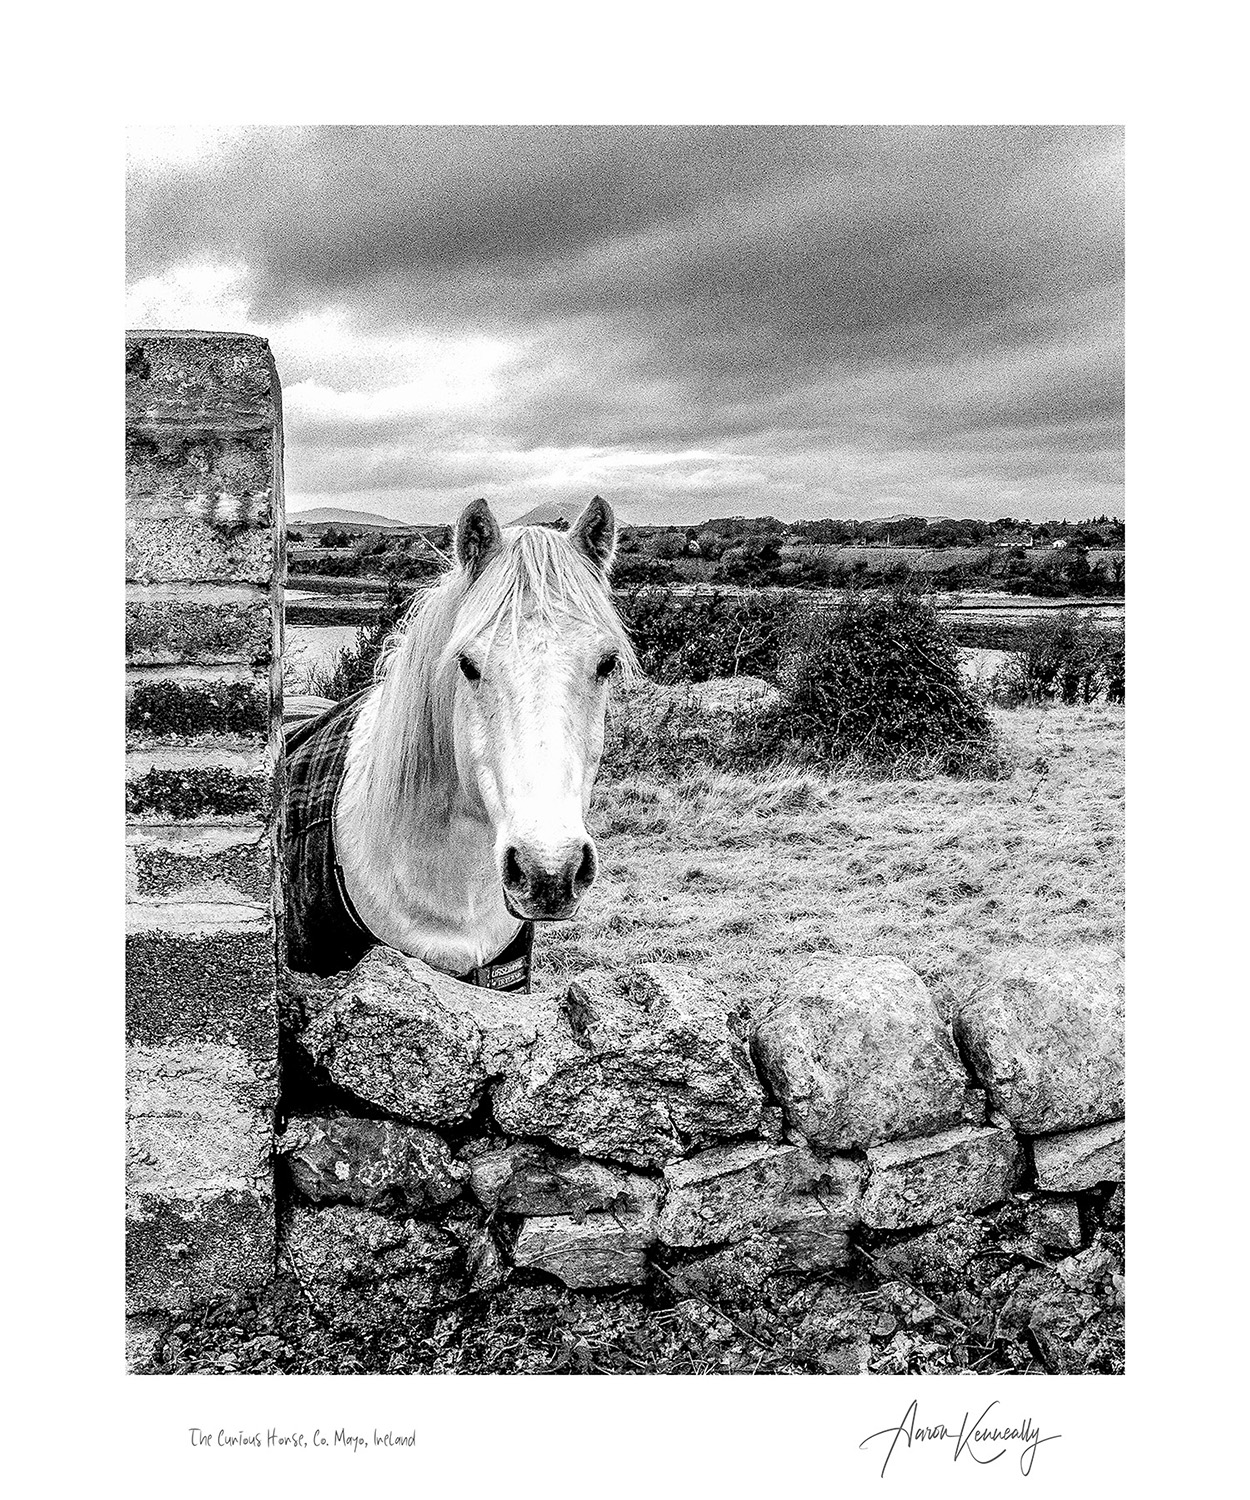 The Curious Horse, Co. Mayo, Ireland